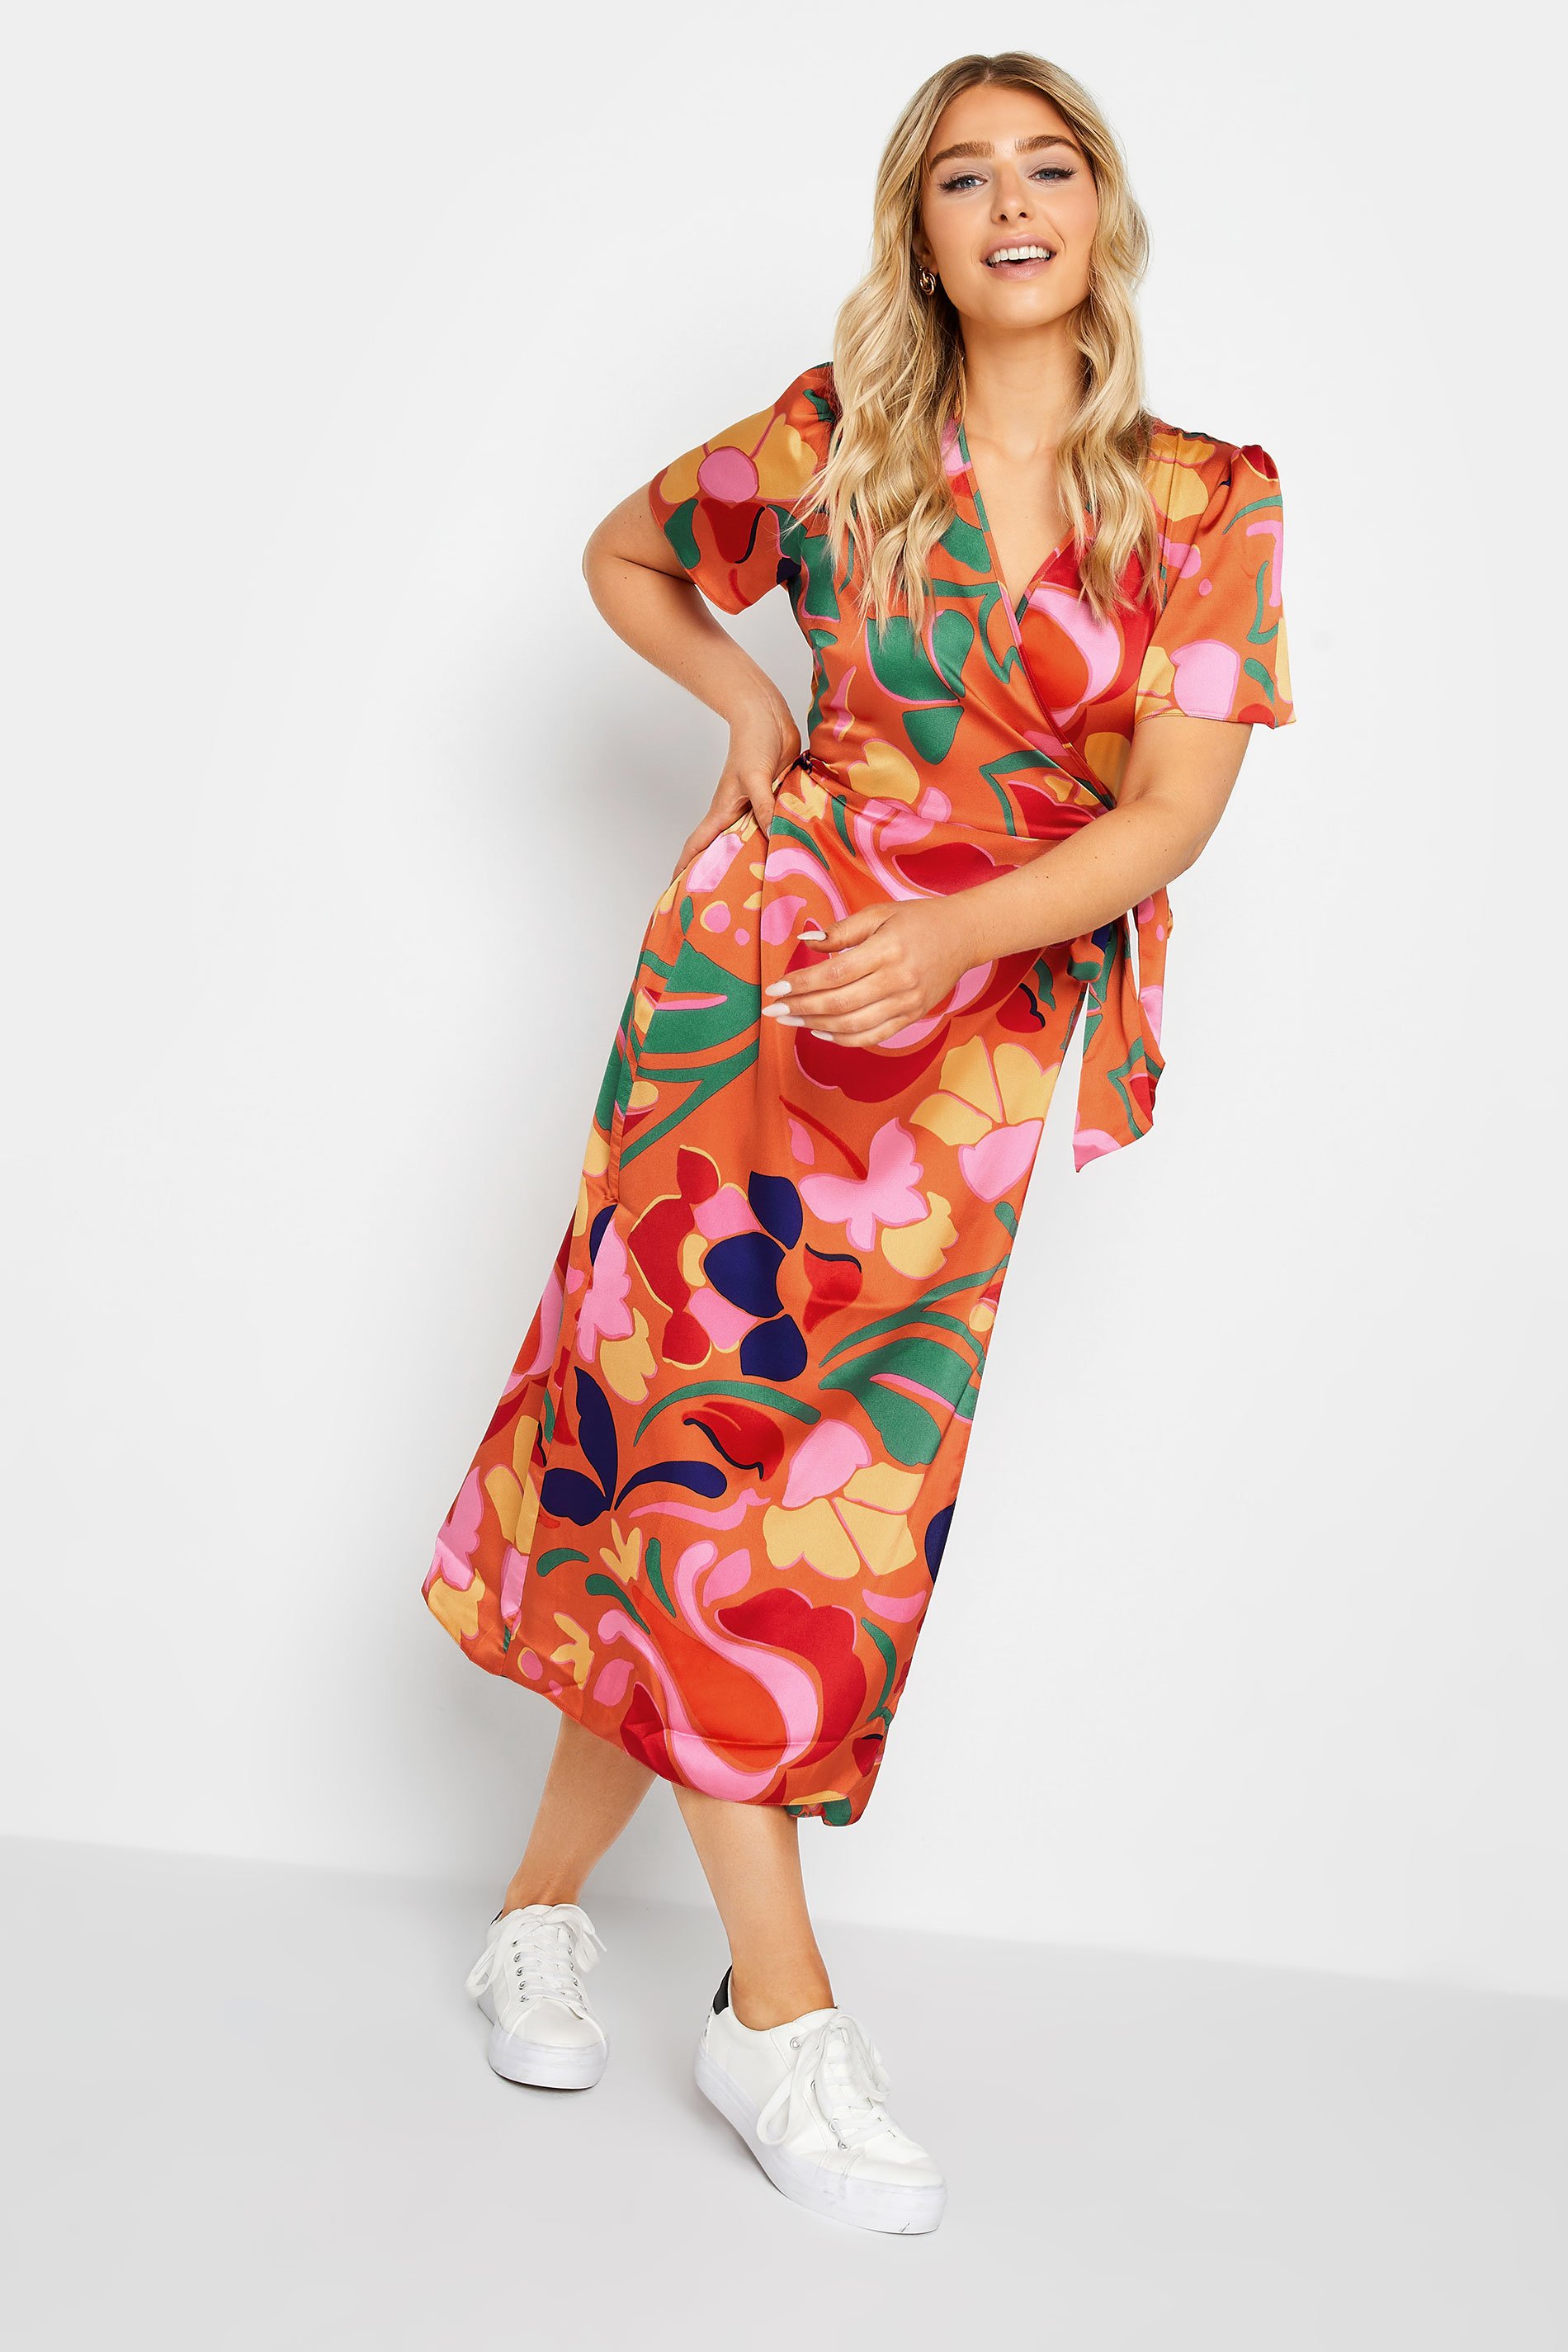 M&Co Orange Floral Print Wrap Dress | M&Co 1